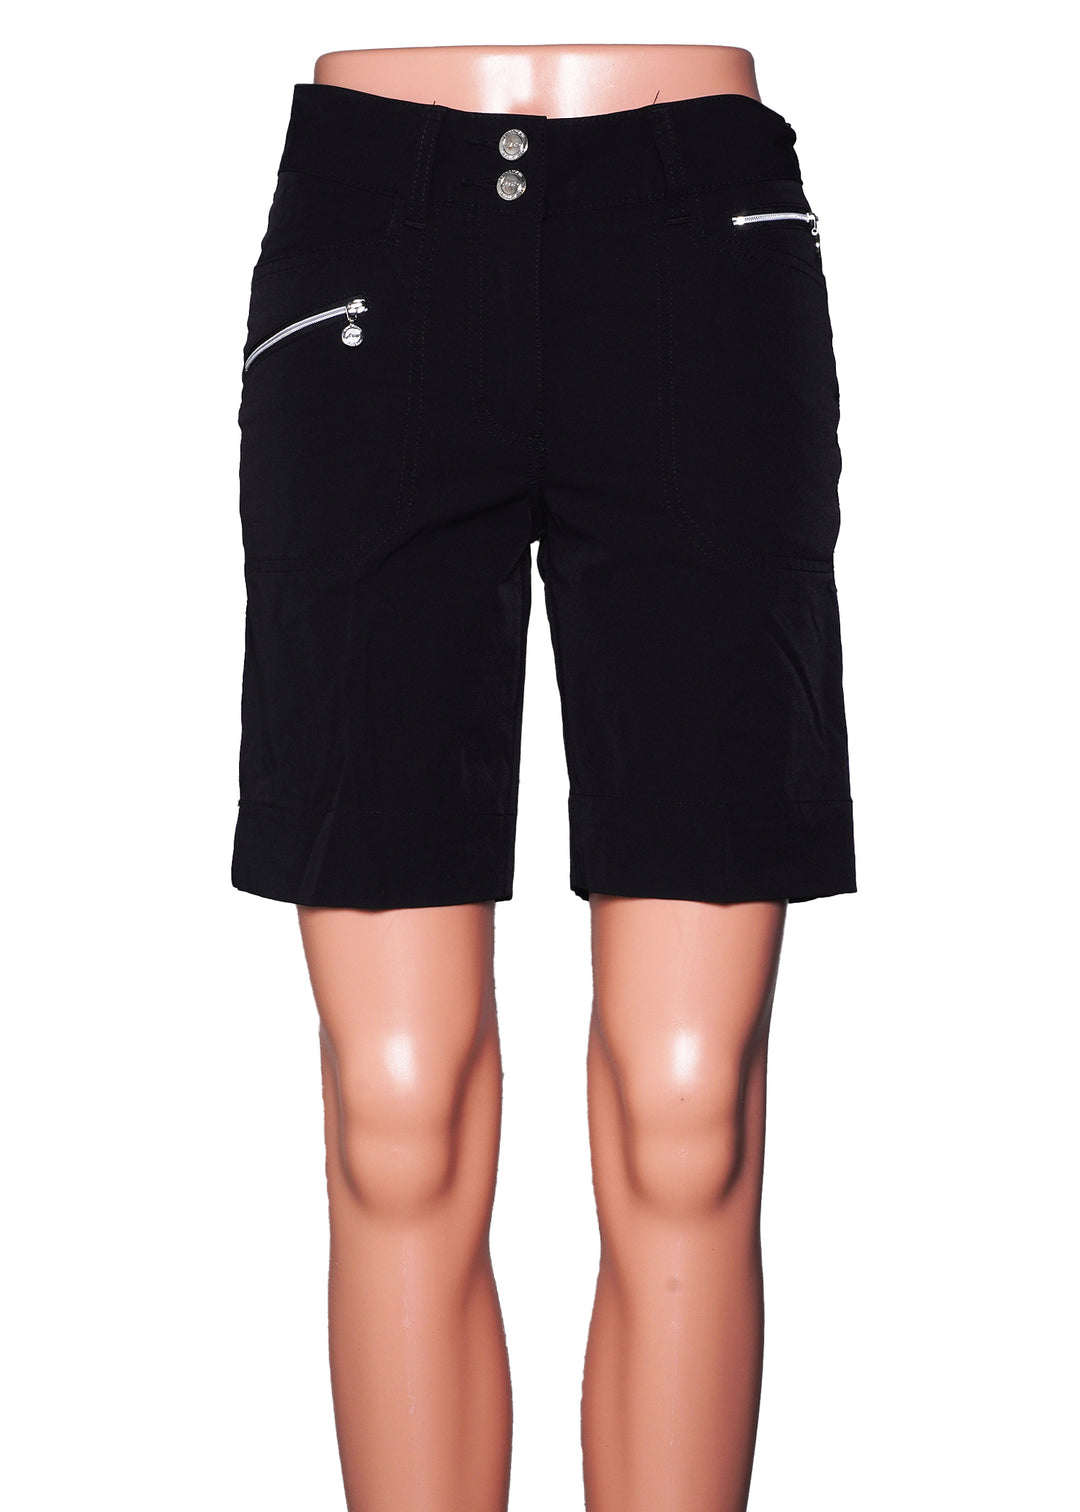 Daily Sports Shorts - Black - Size 2 - Skorzie